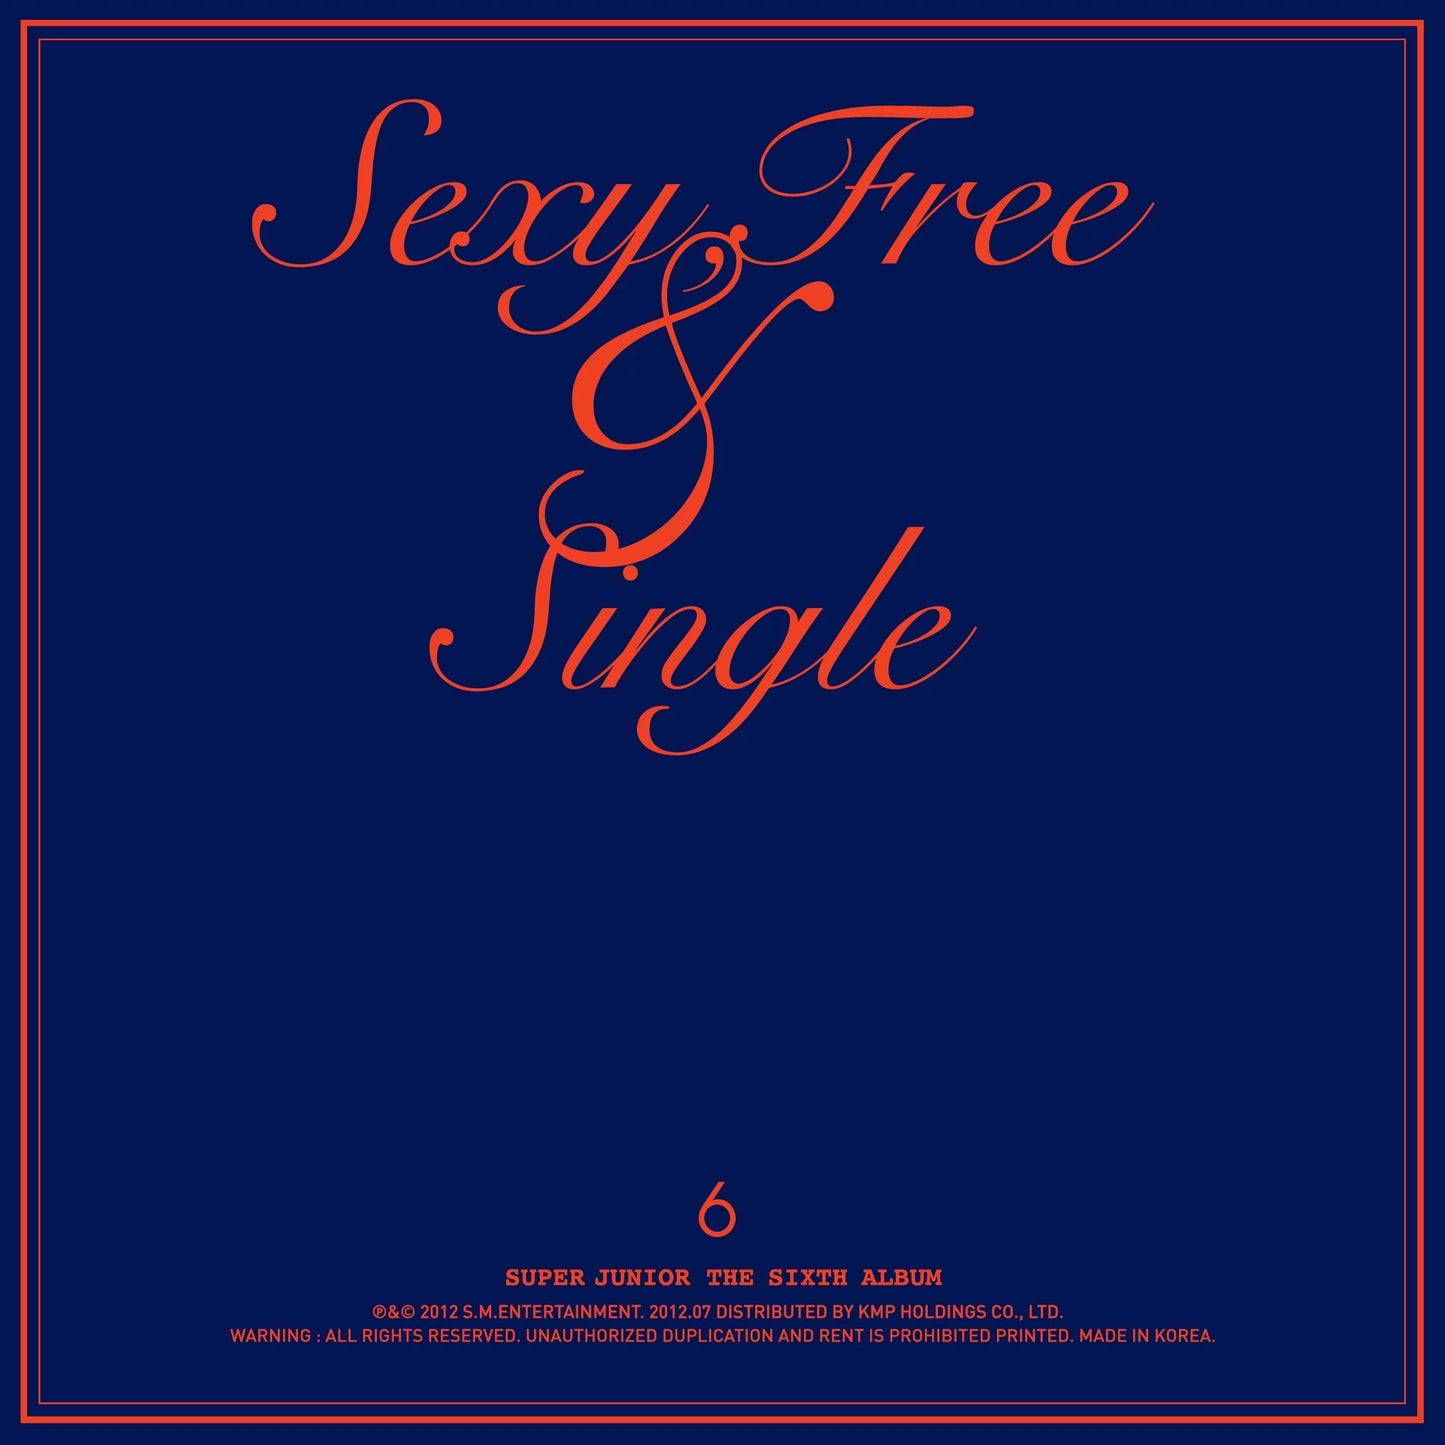 Super Junior - Sexy, Free & Single (B Ver.)